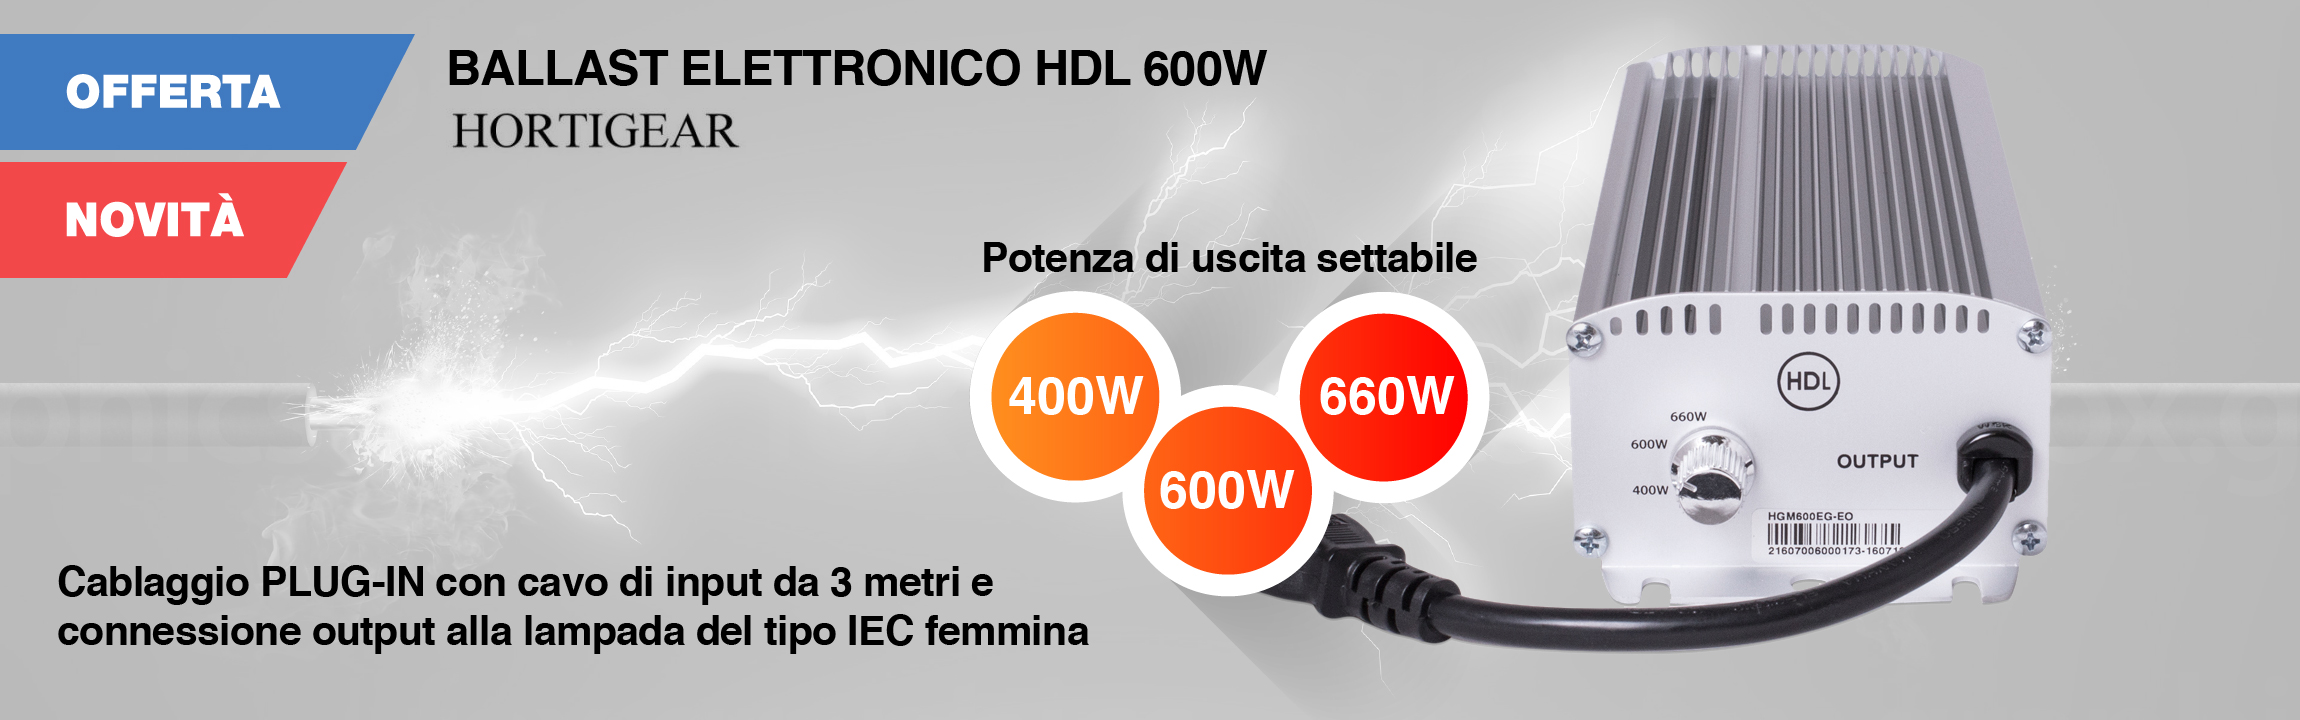 BALLAST ELETTRONICO HDL 600W